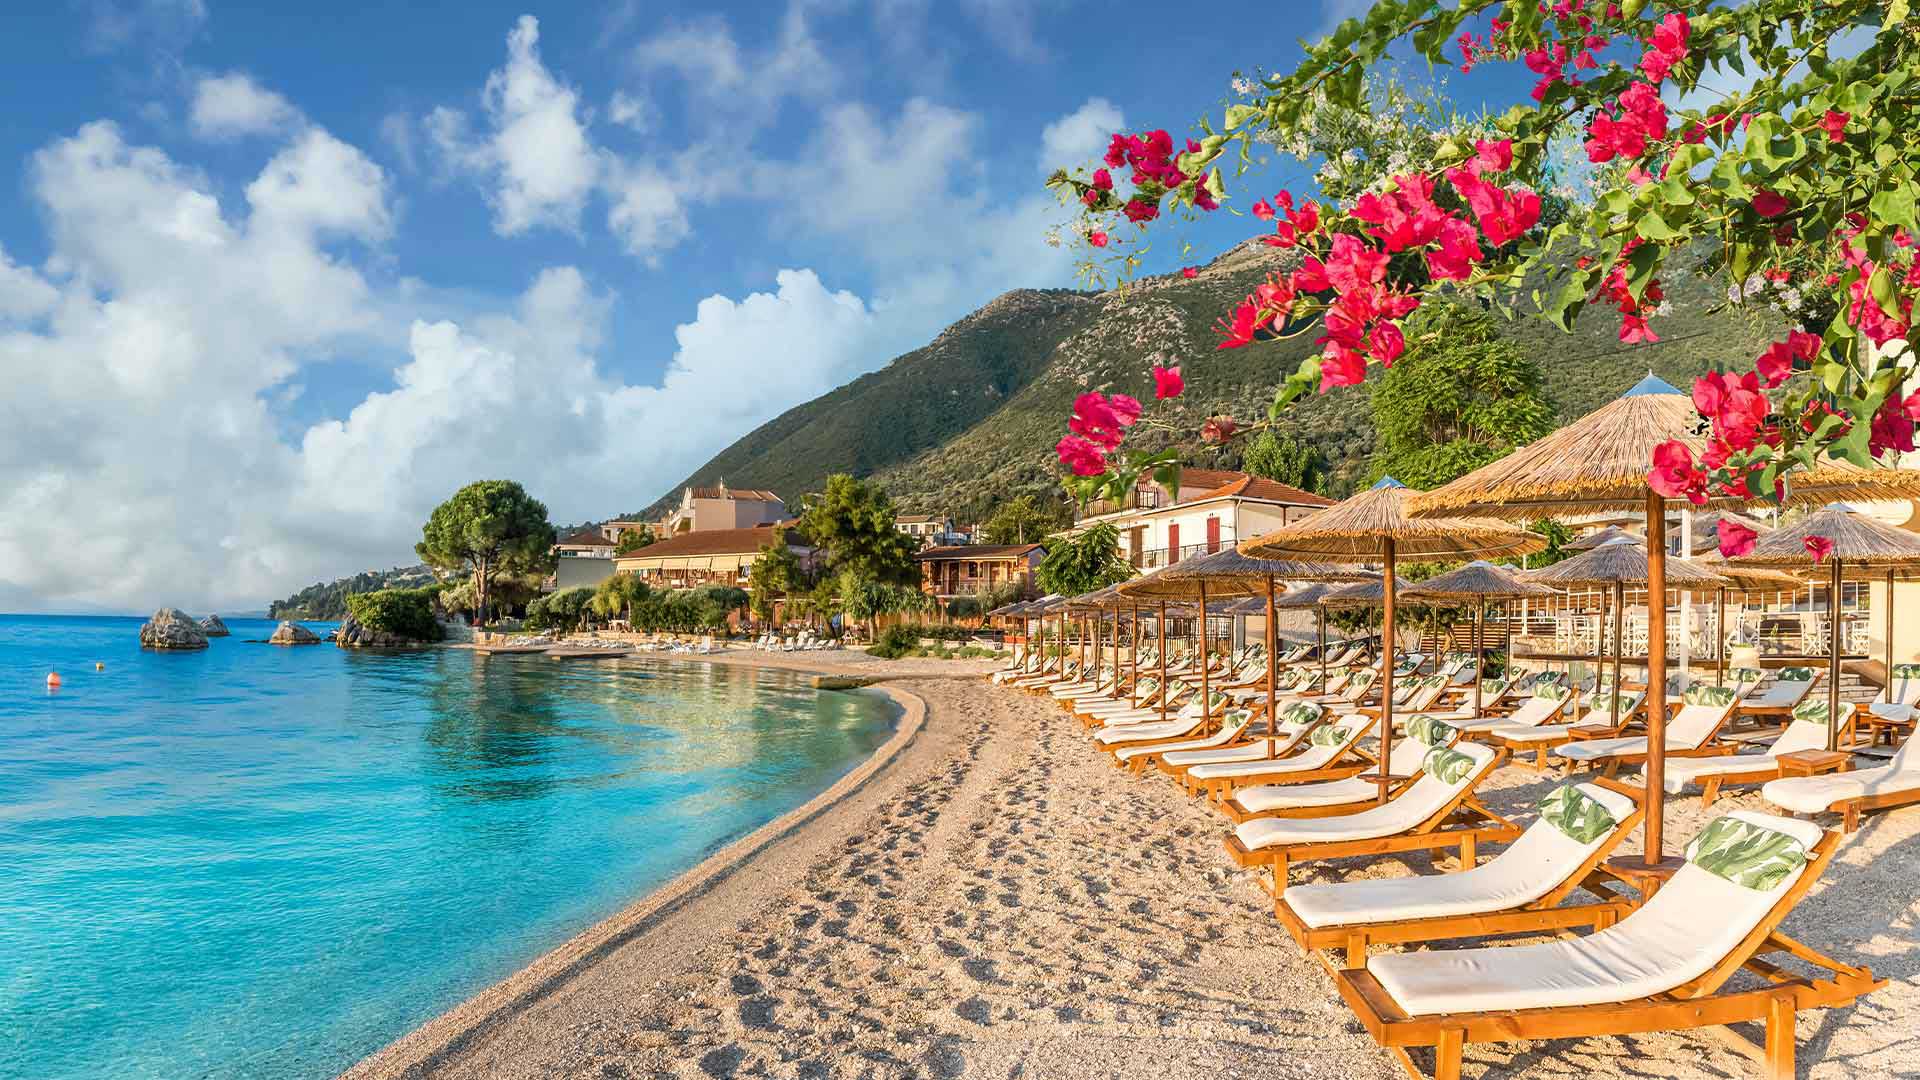 Resort beachfront in Nikiana, Lefkada, highlighting luxury real estate options.